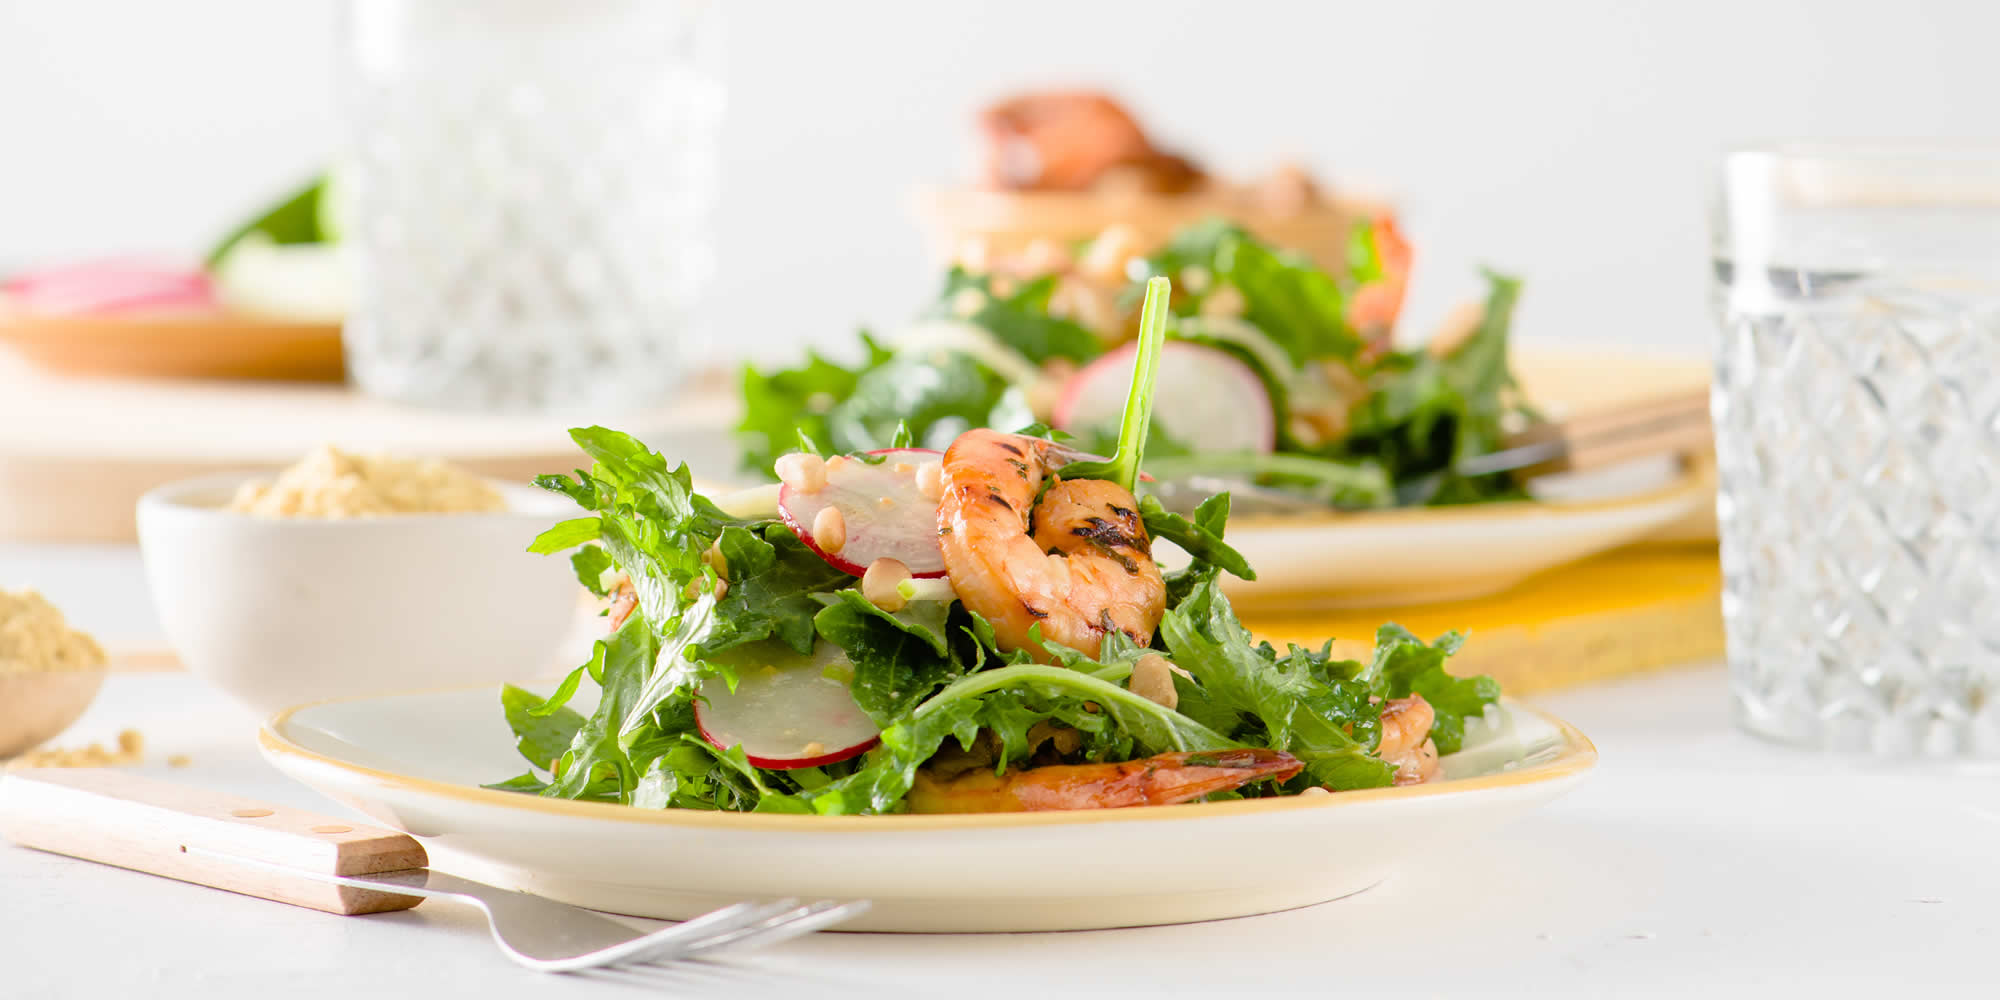 Grilled Mustard-Soy Marinated Prawns with Apple & Radish Salad and Miso-Mustard Vinaigrette